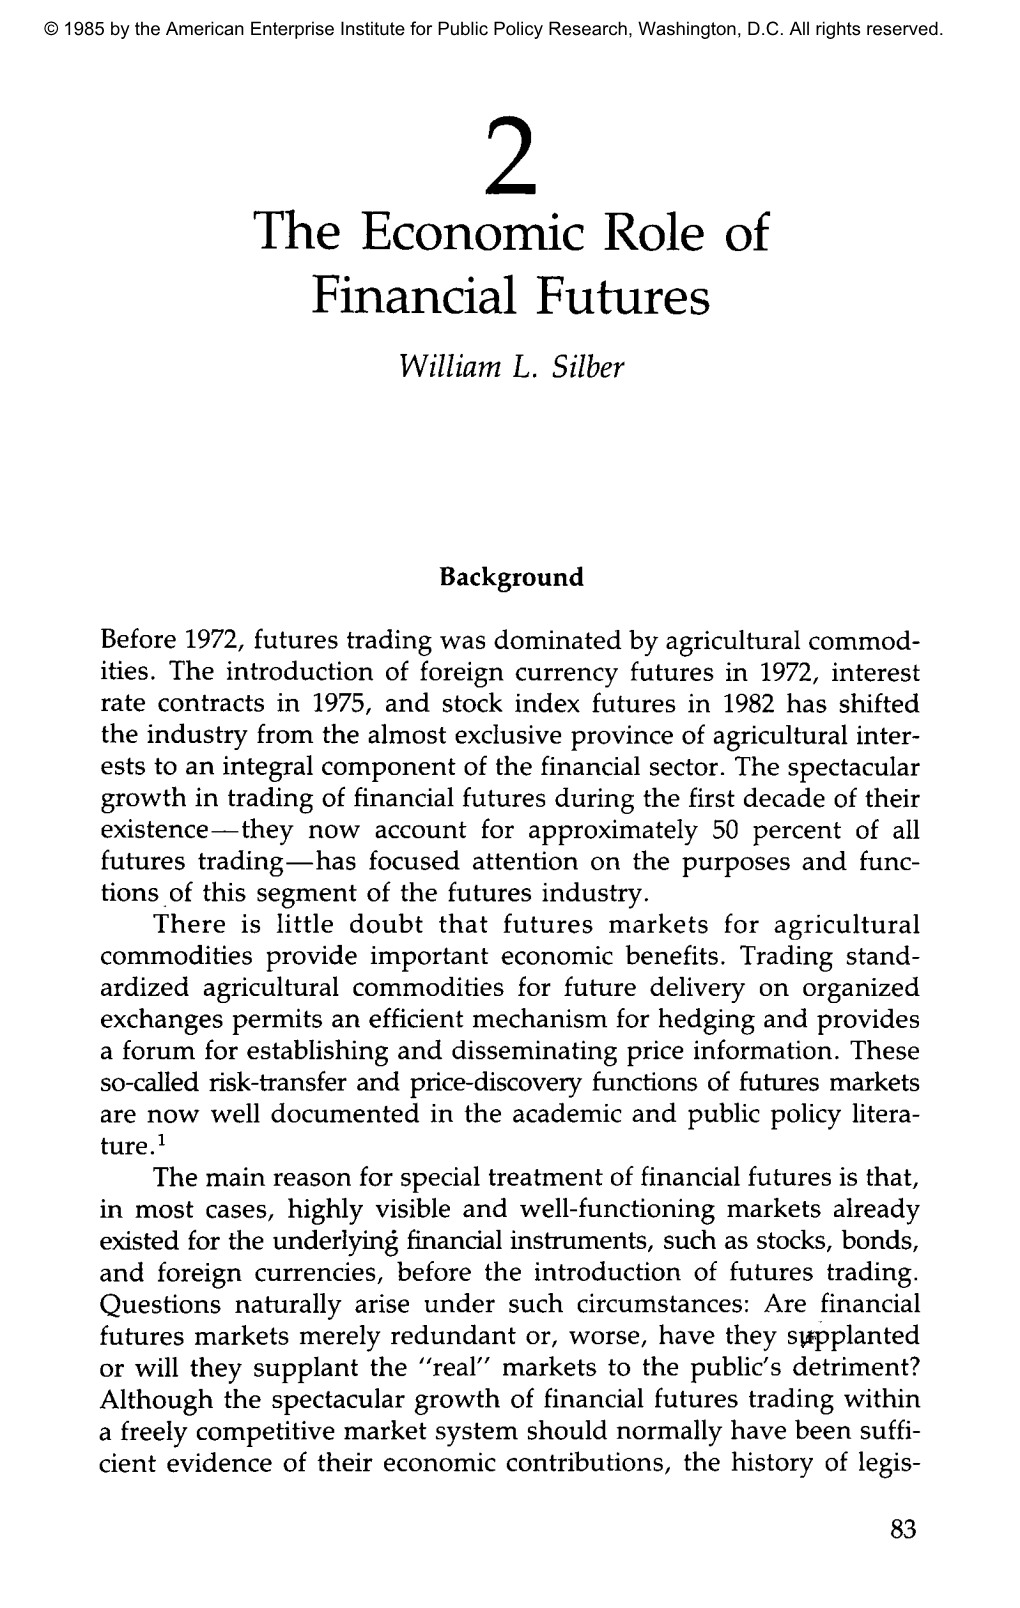 The Economic Role of Financial Futures William L